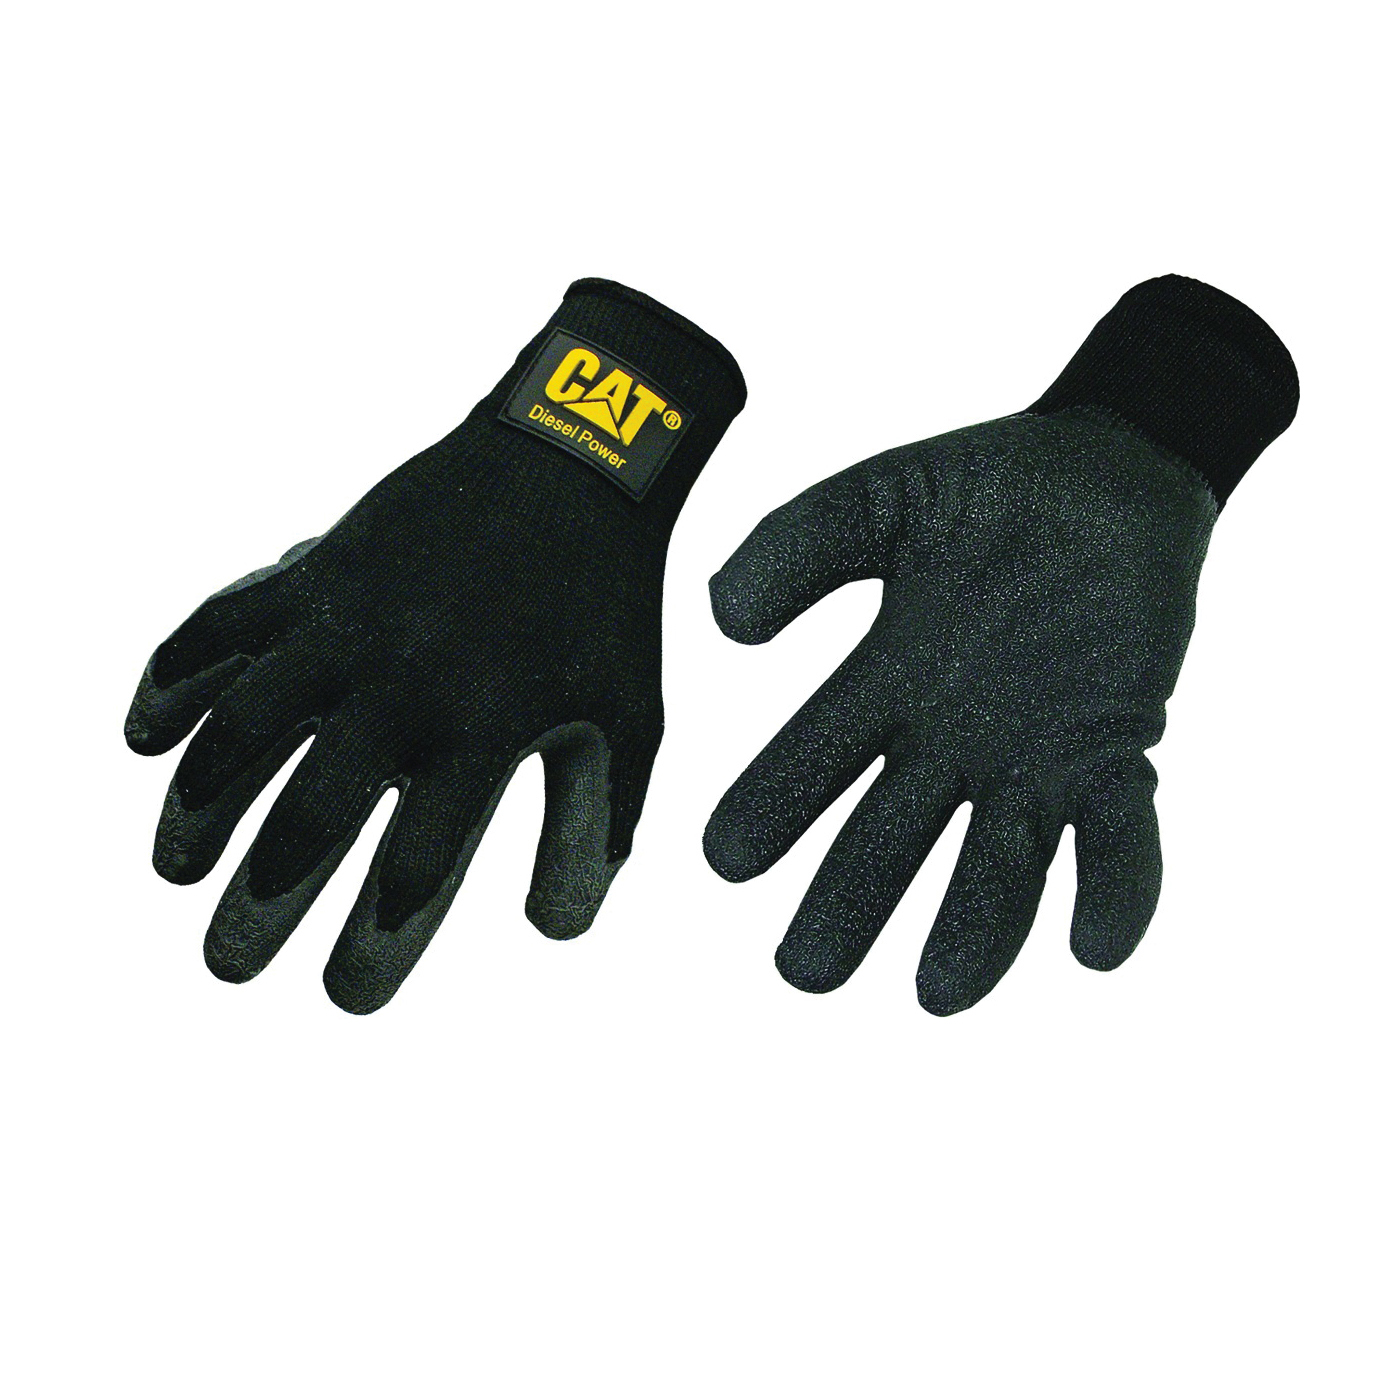 CAT017400L Protective Gloves, L, Knit Wrist Cuff, Cotton/Polyester Glove, Black